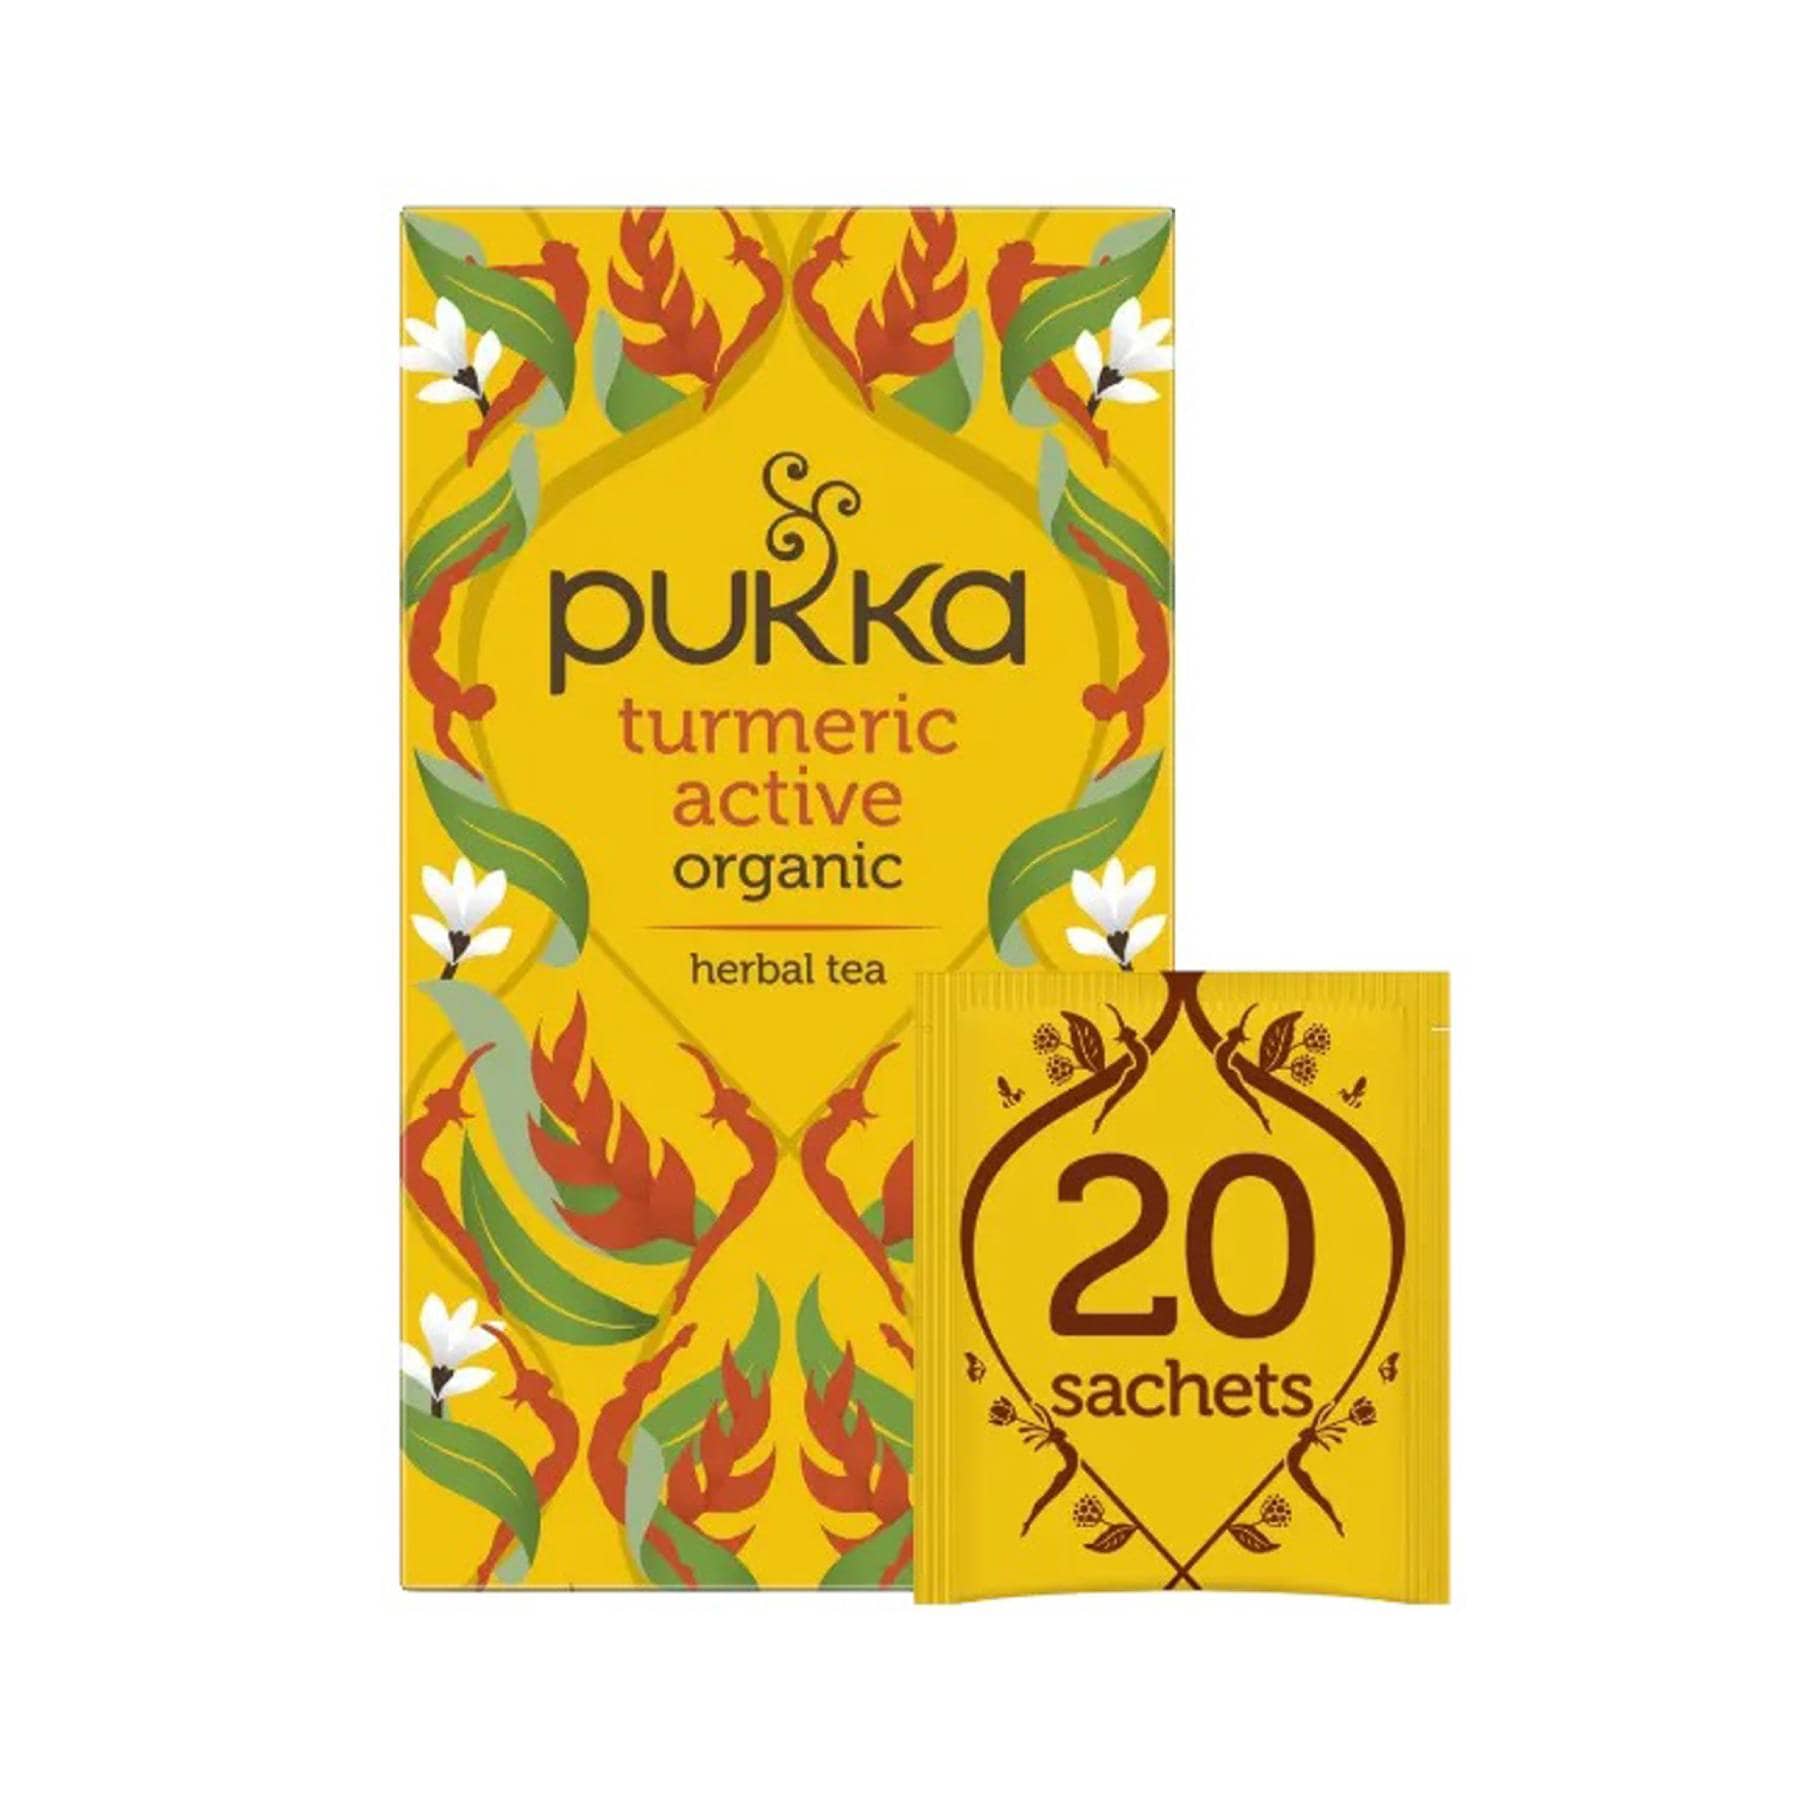 Pukka turmeric active 20 tea bags